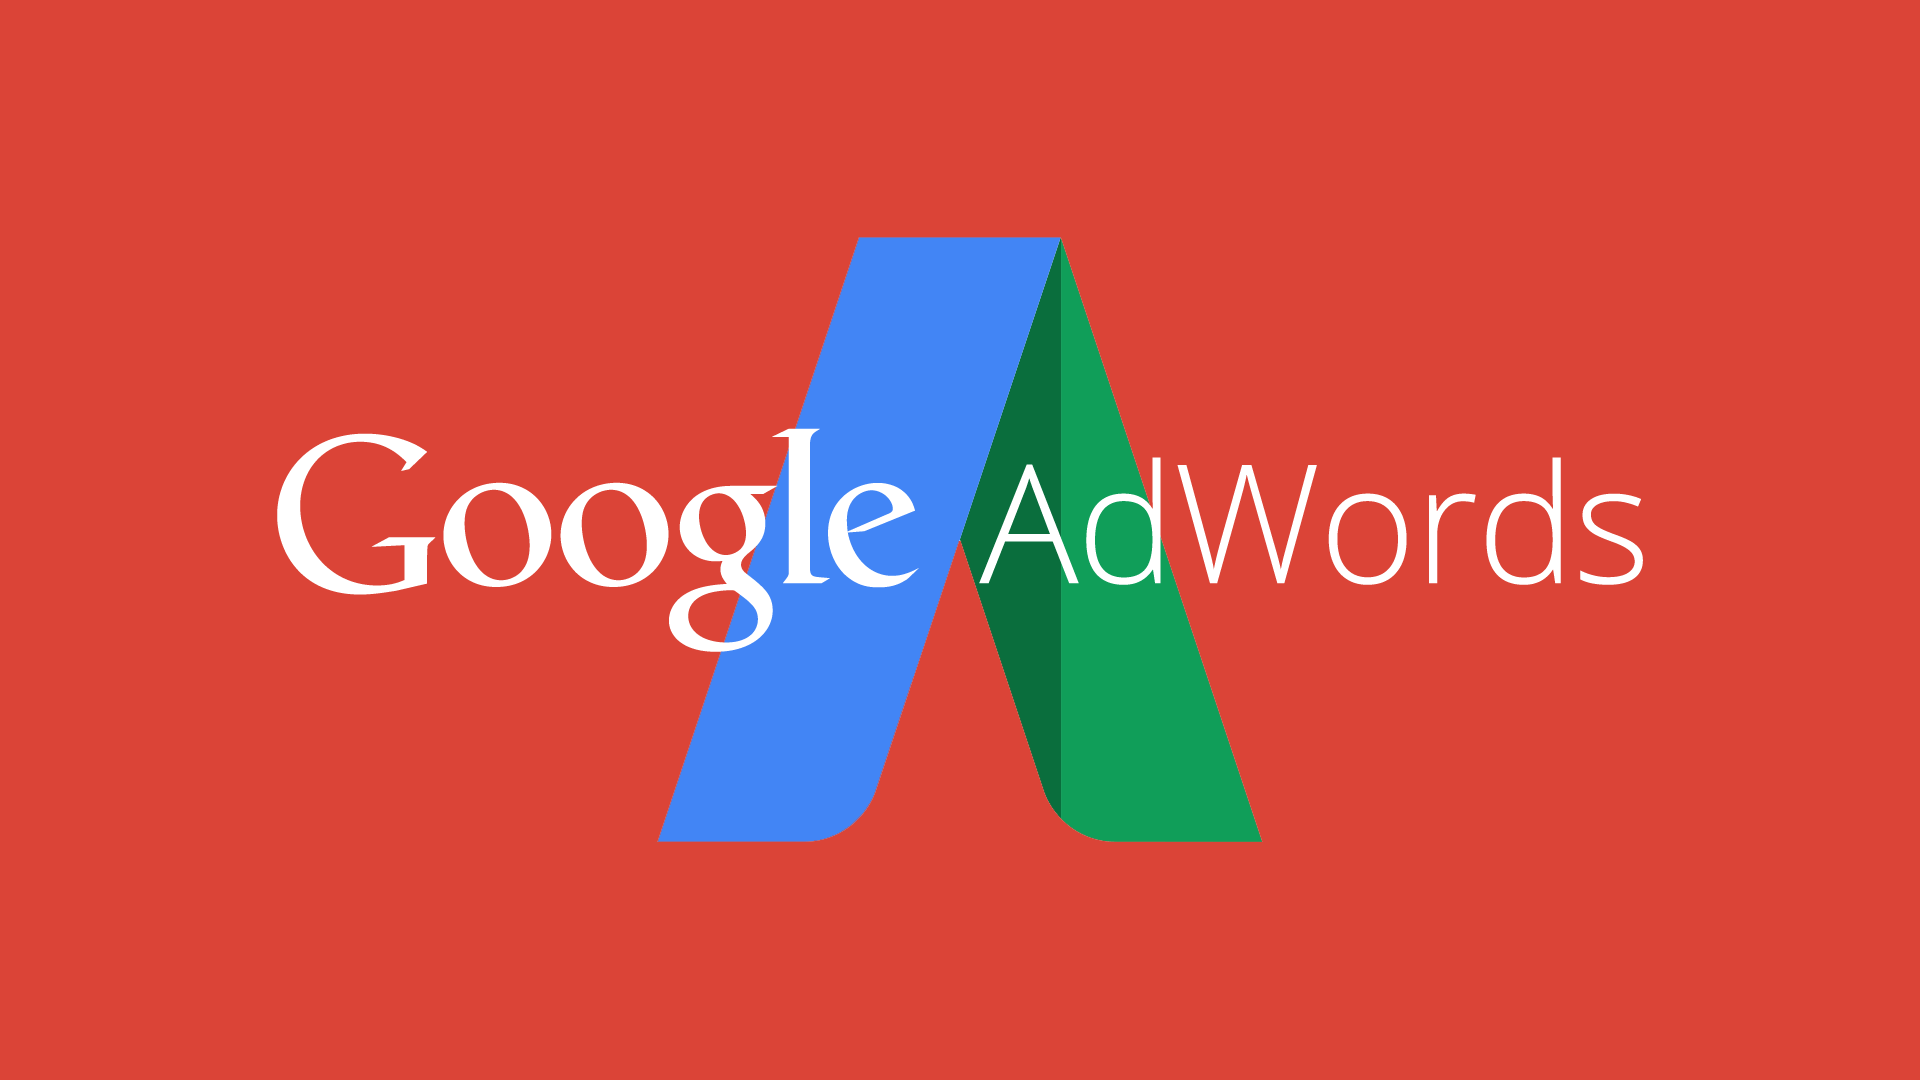 Google Adwords PPC 广告的 message match 信息匹配43 / 作者:affren / 来源:affren.com